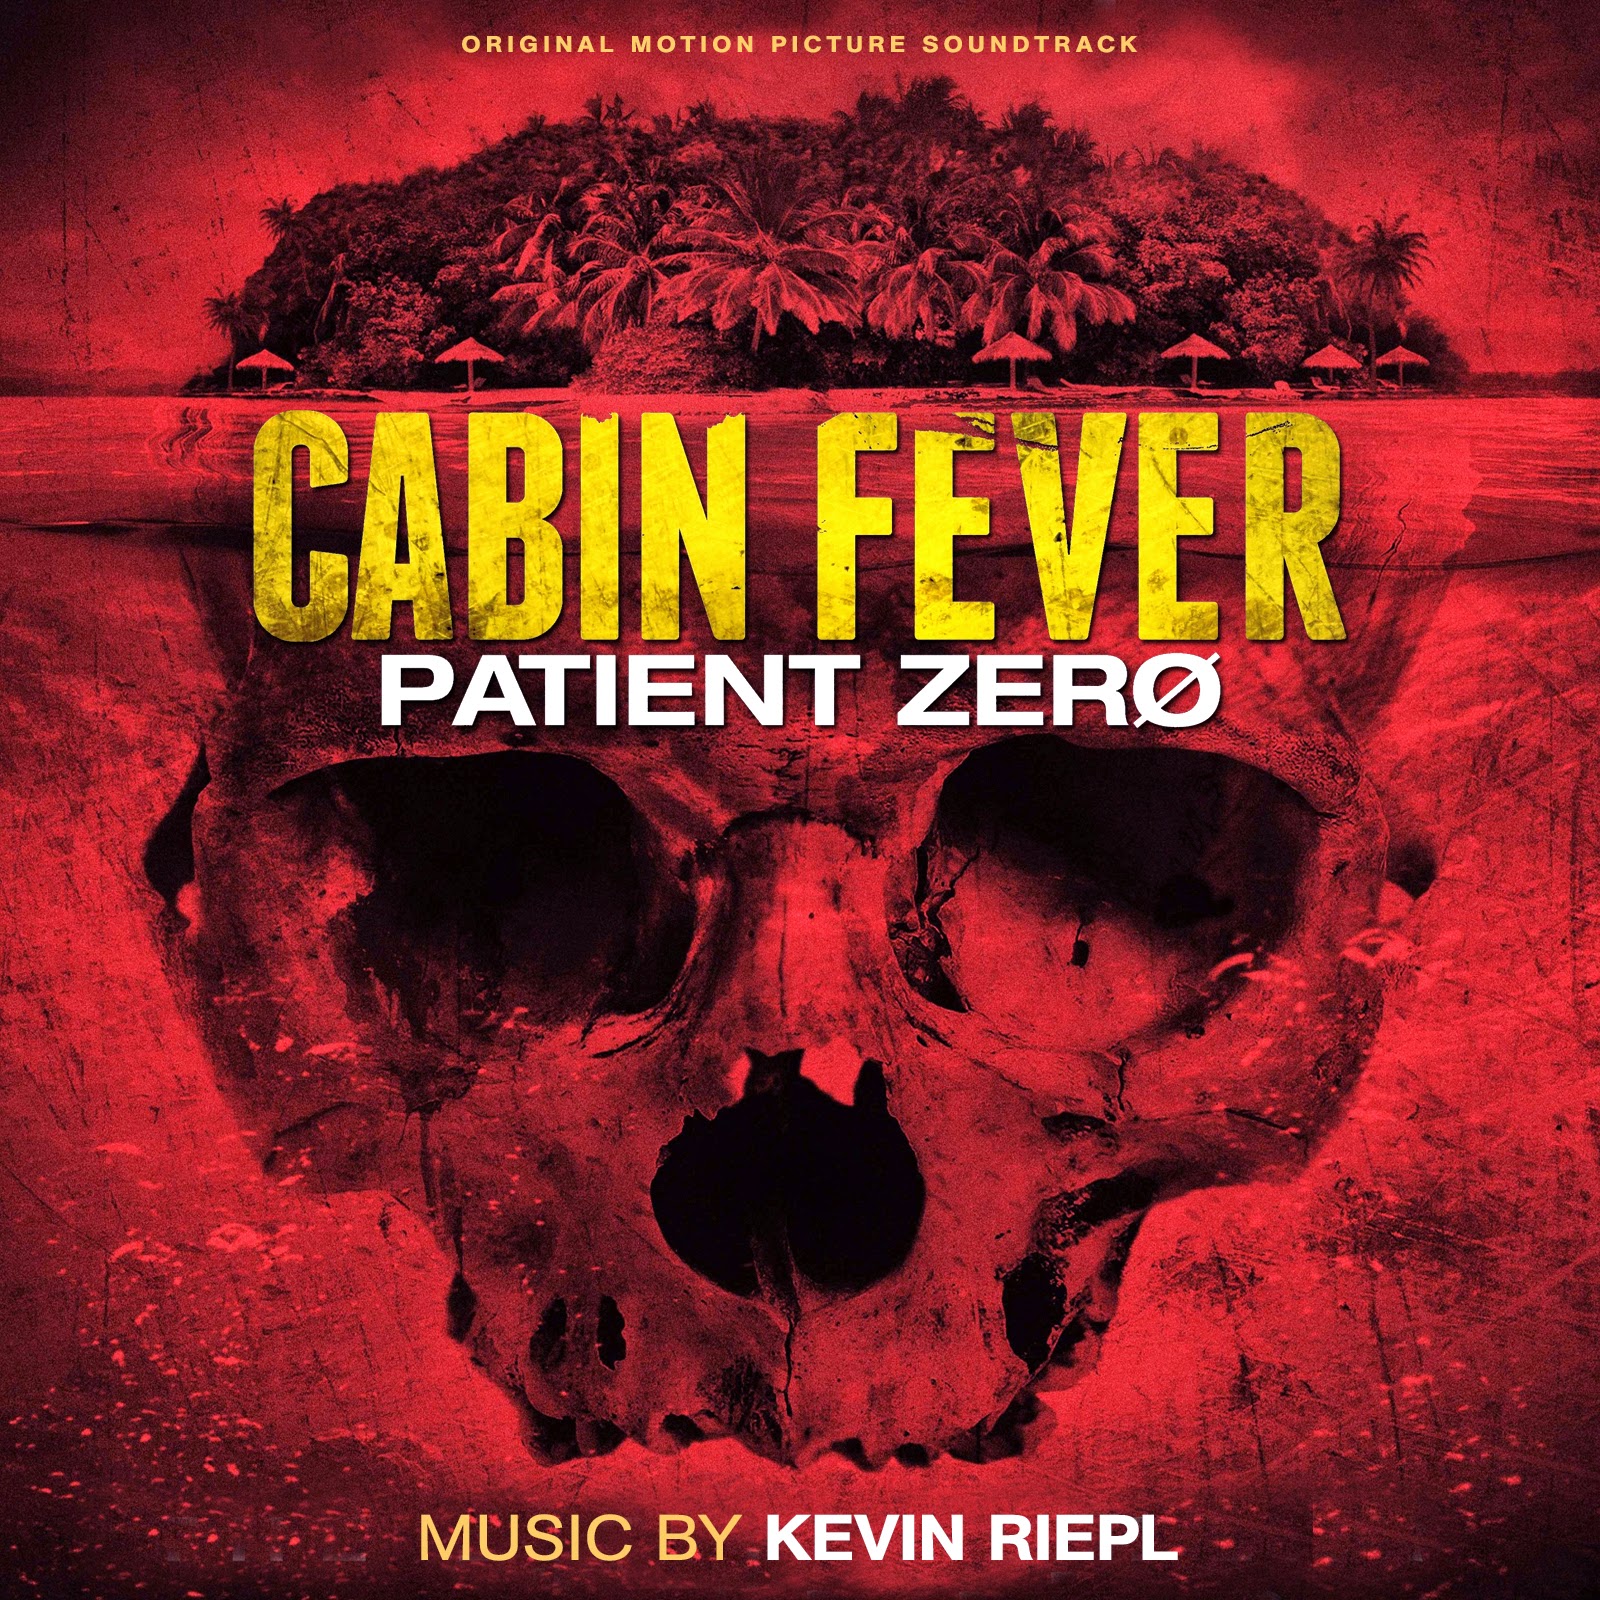 exclusive-interview-kevin-riepl-discusses-cabin-fever-patient-zero